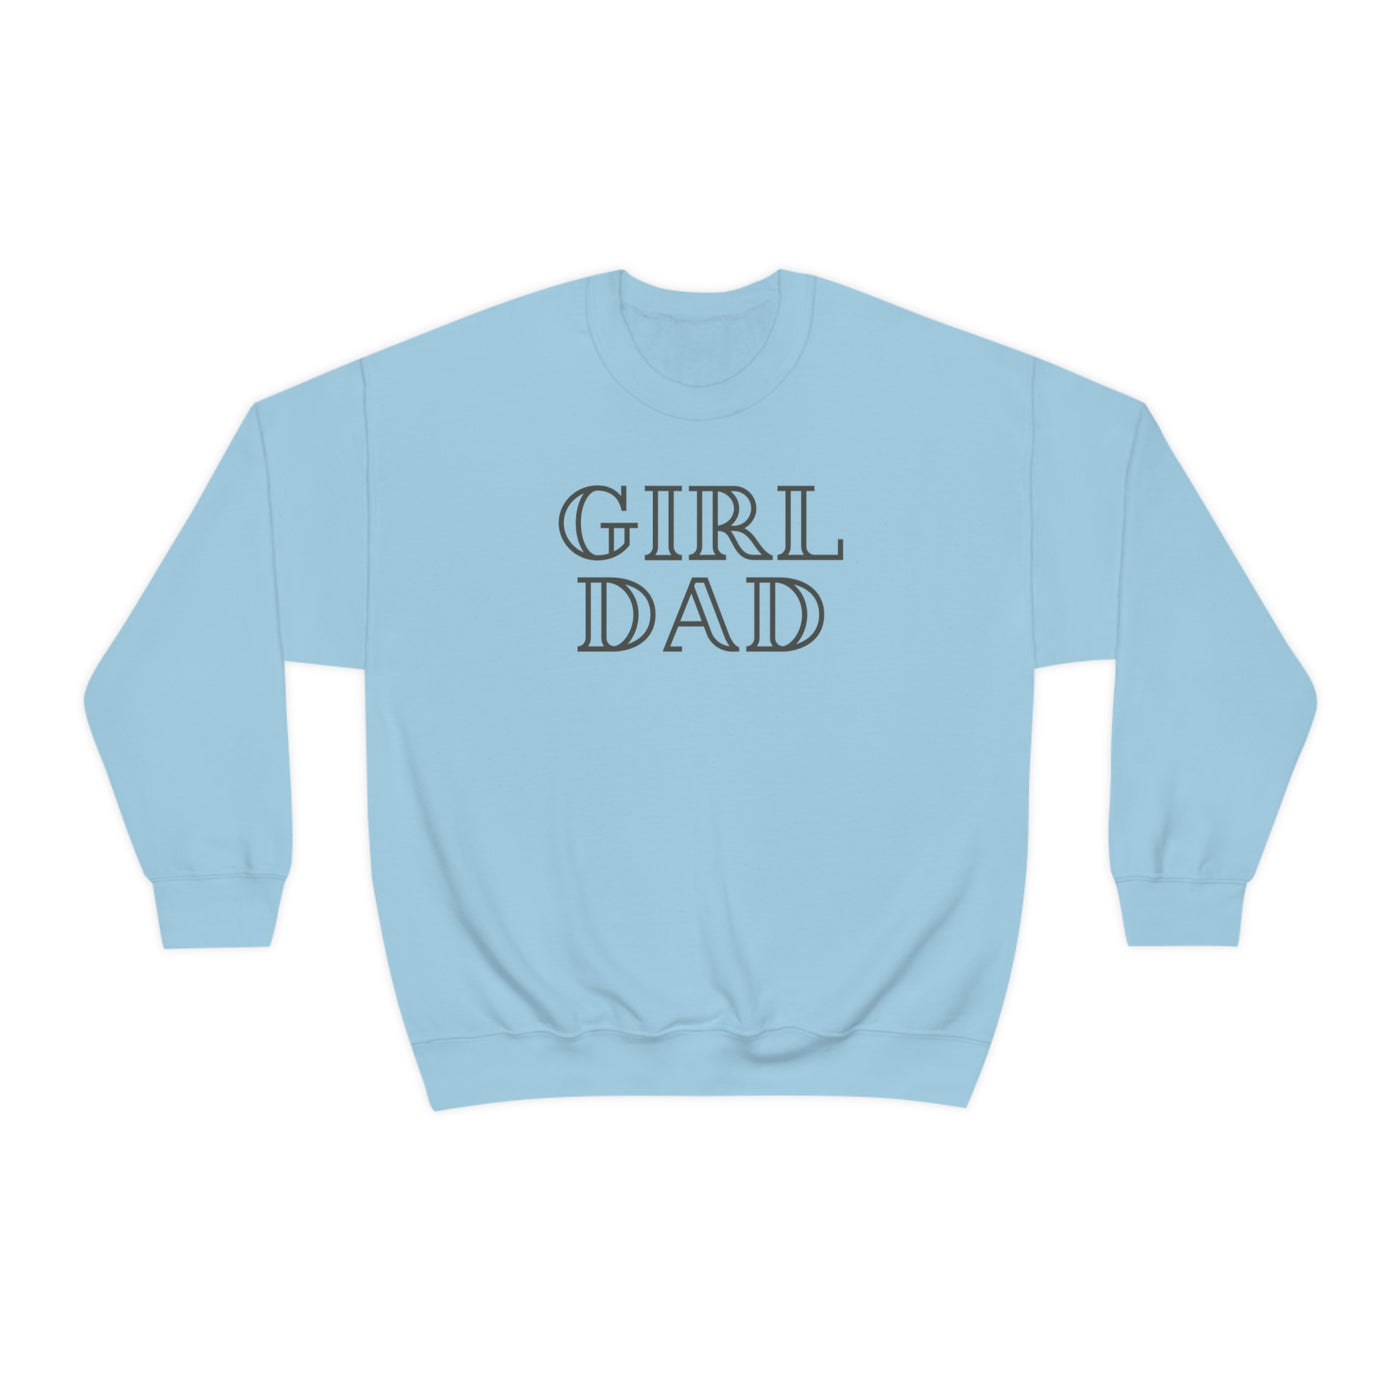 Girl Dad Crewneck Sweatshirt